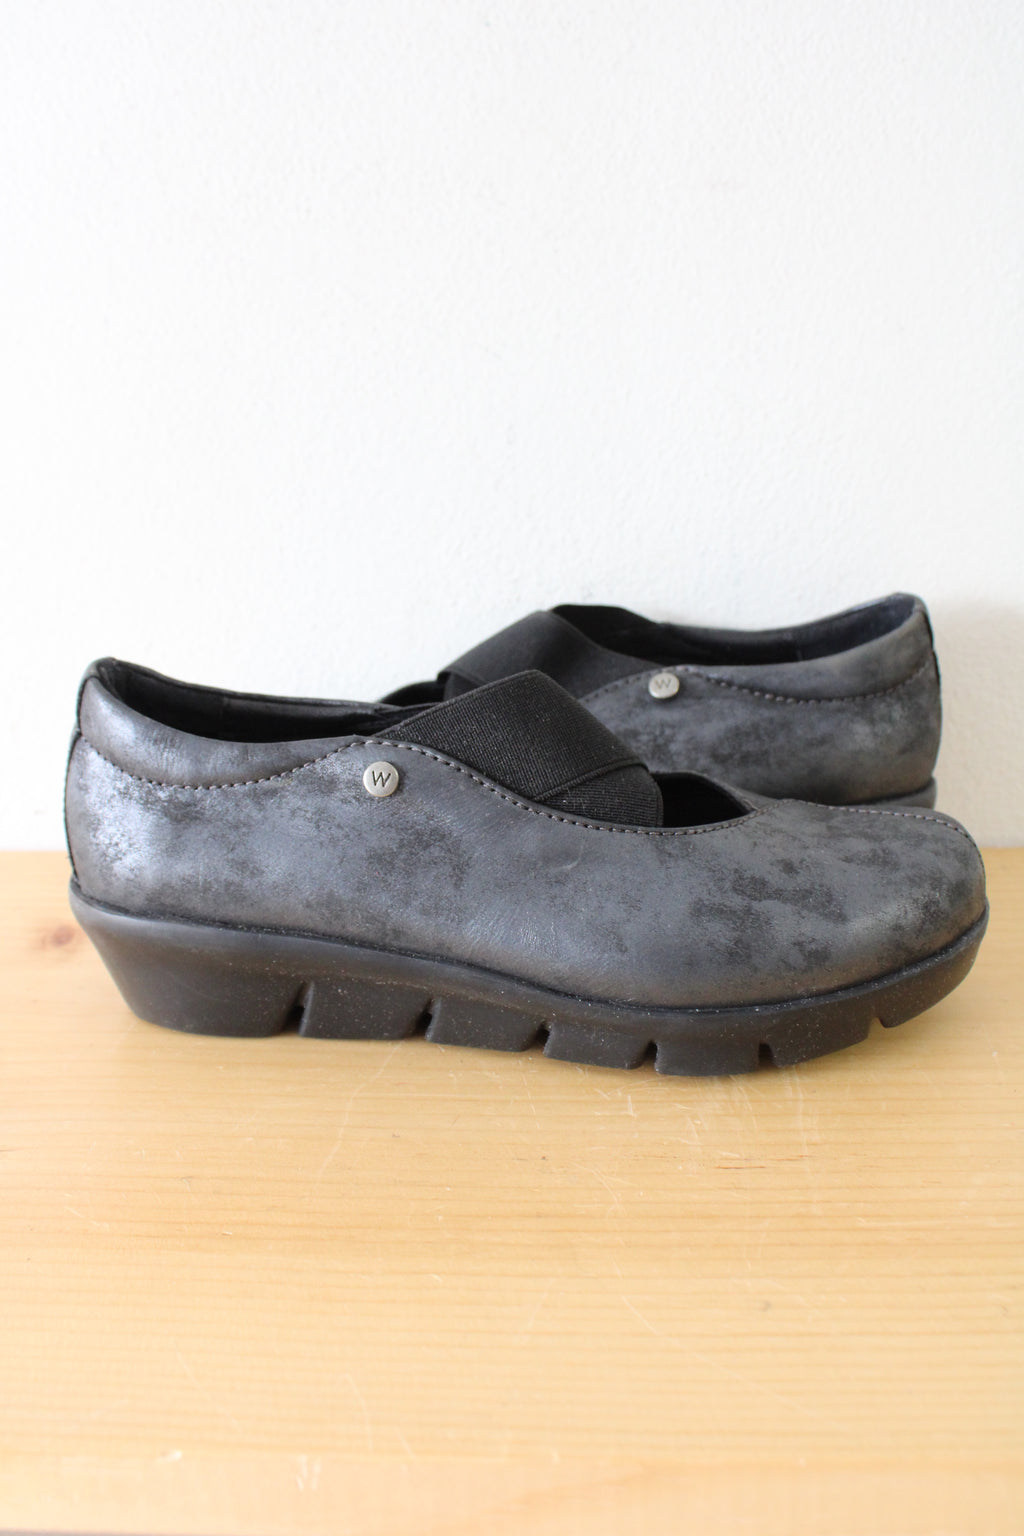 Wolky Black & Gray Slip On Shoe | Size 38 (7.5)